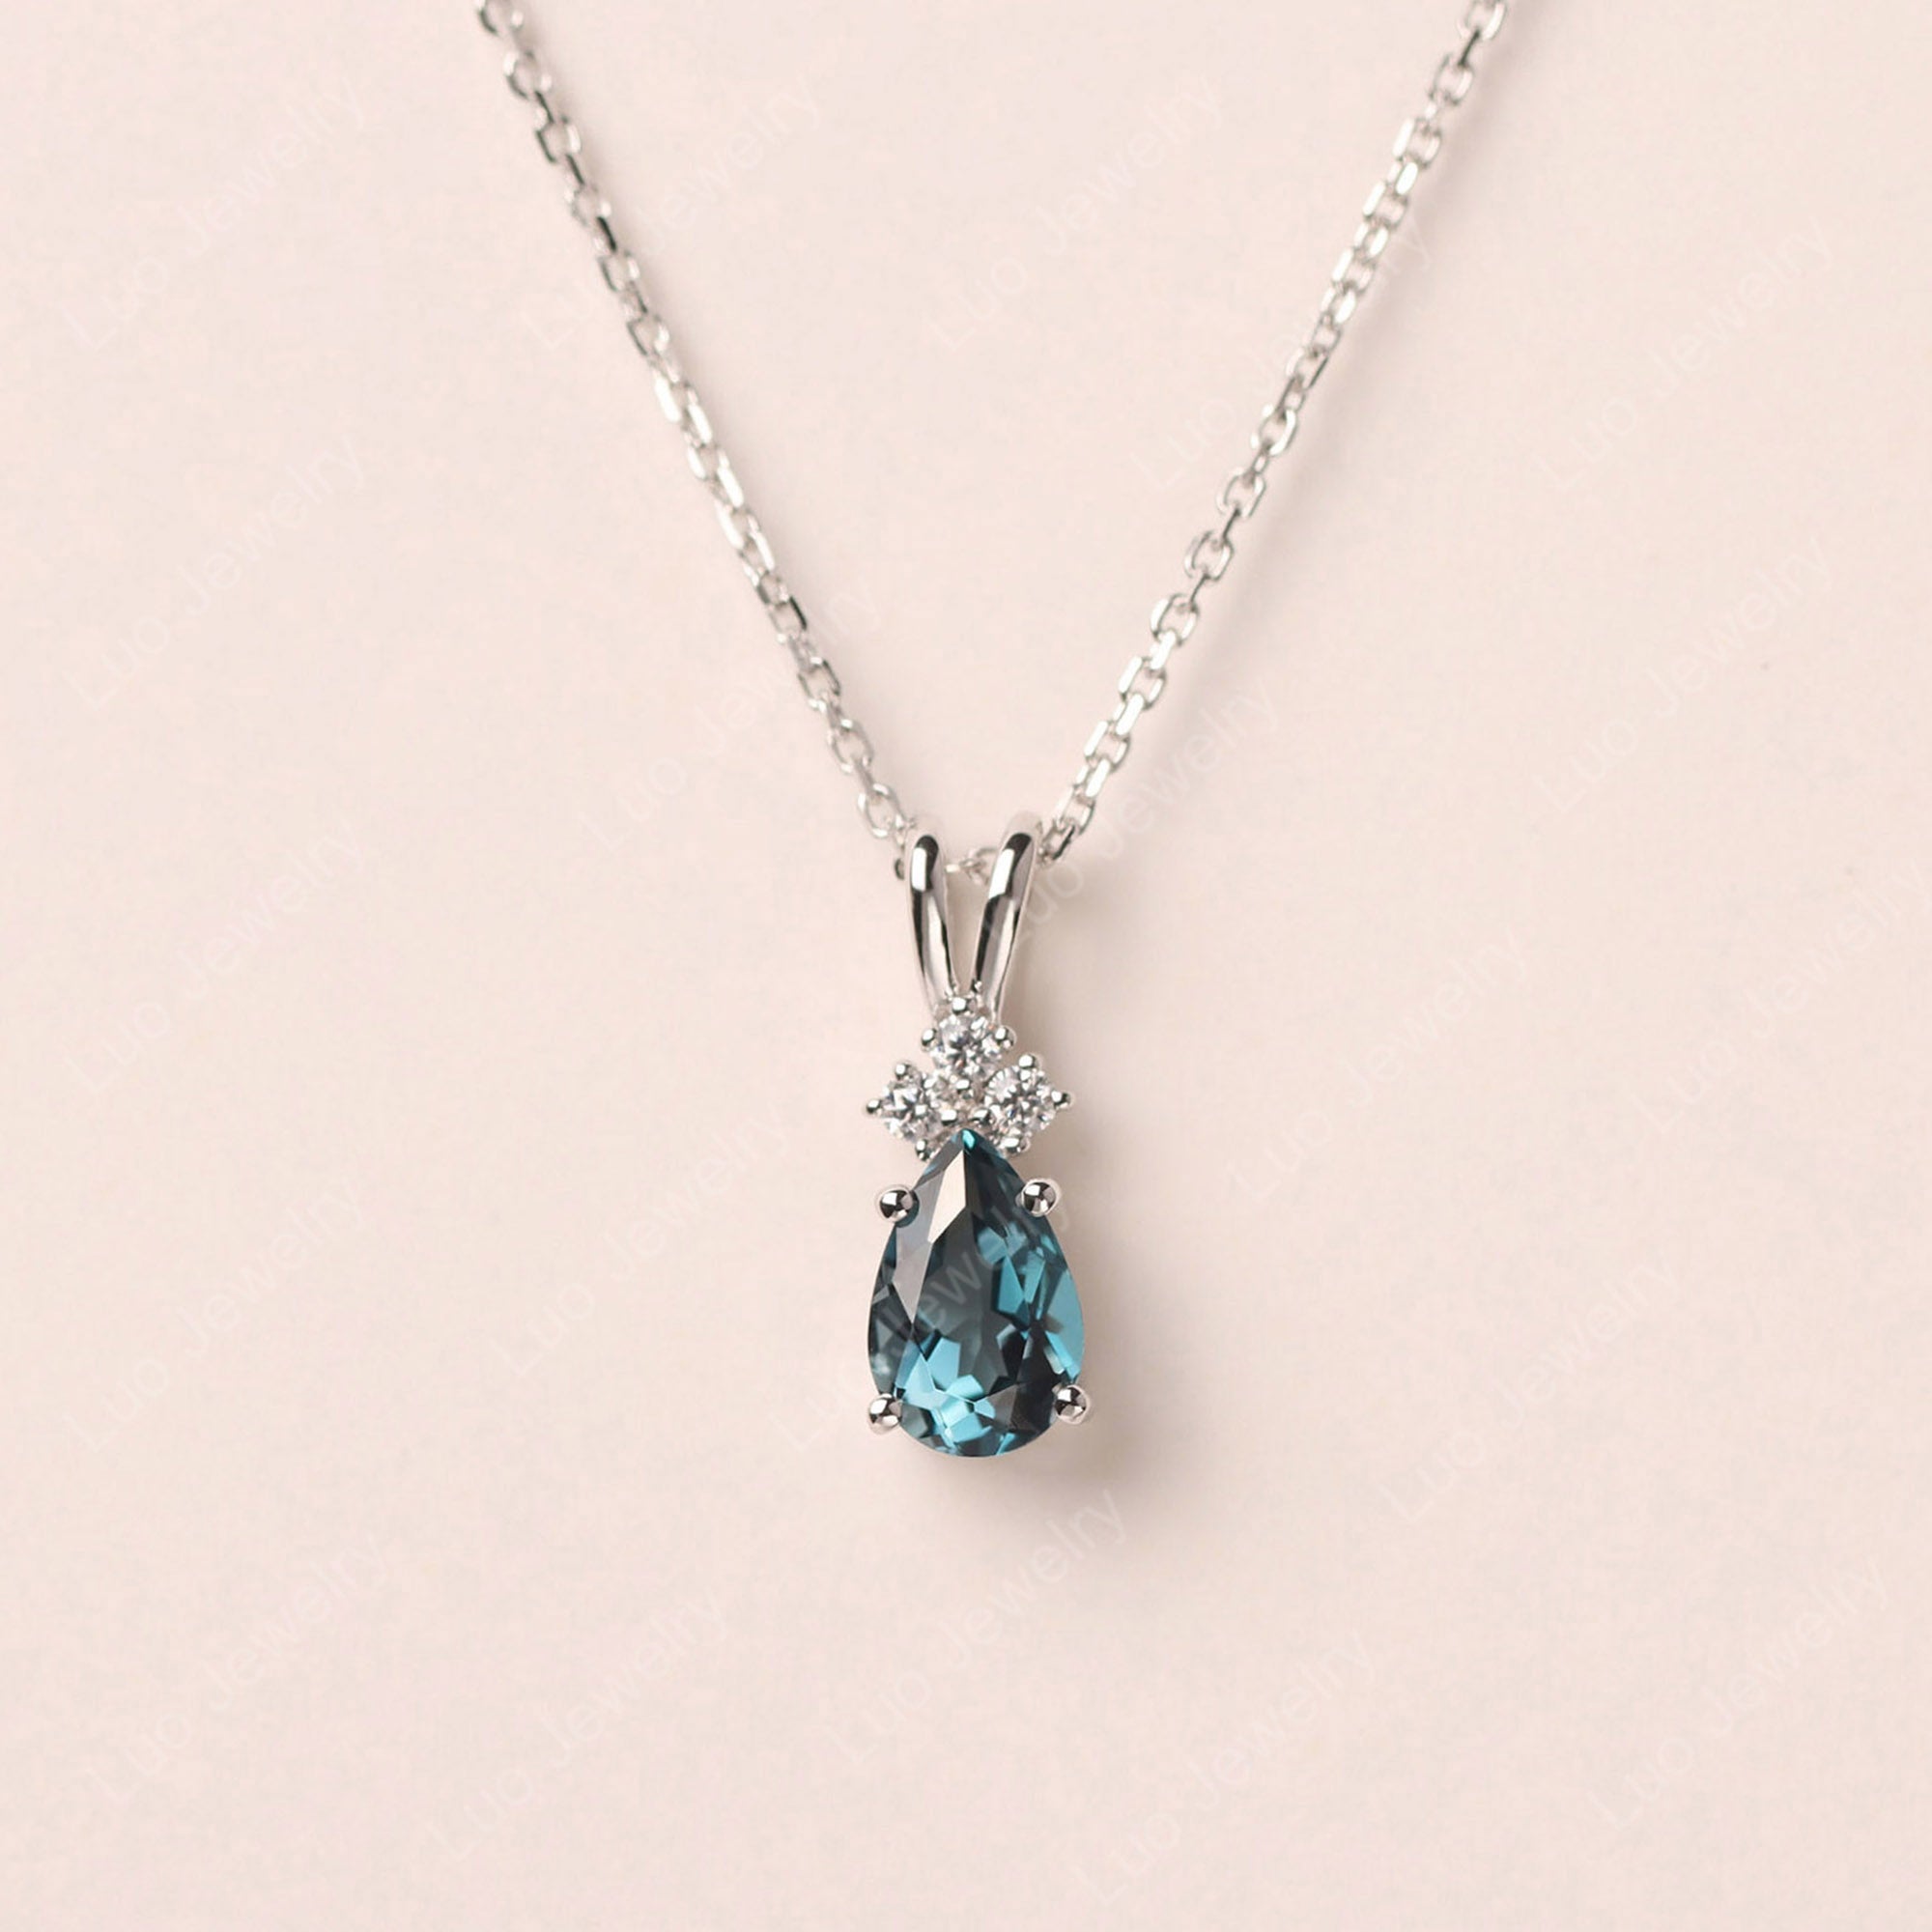 Pear Shaped London Blue Topaz Necklace